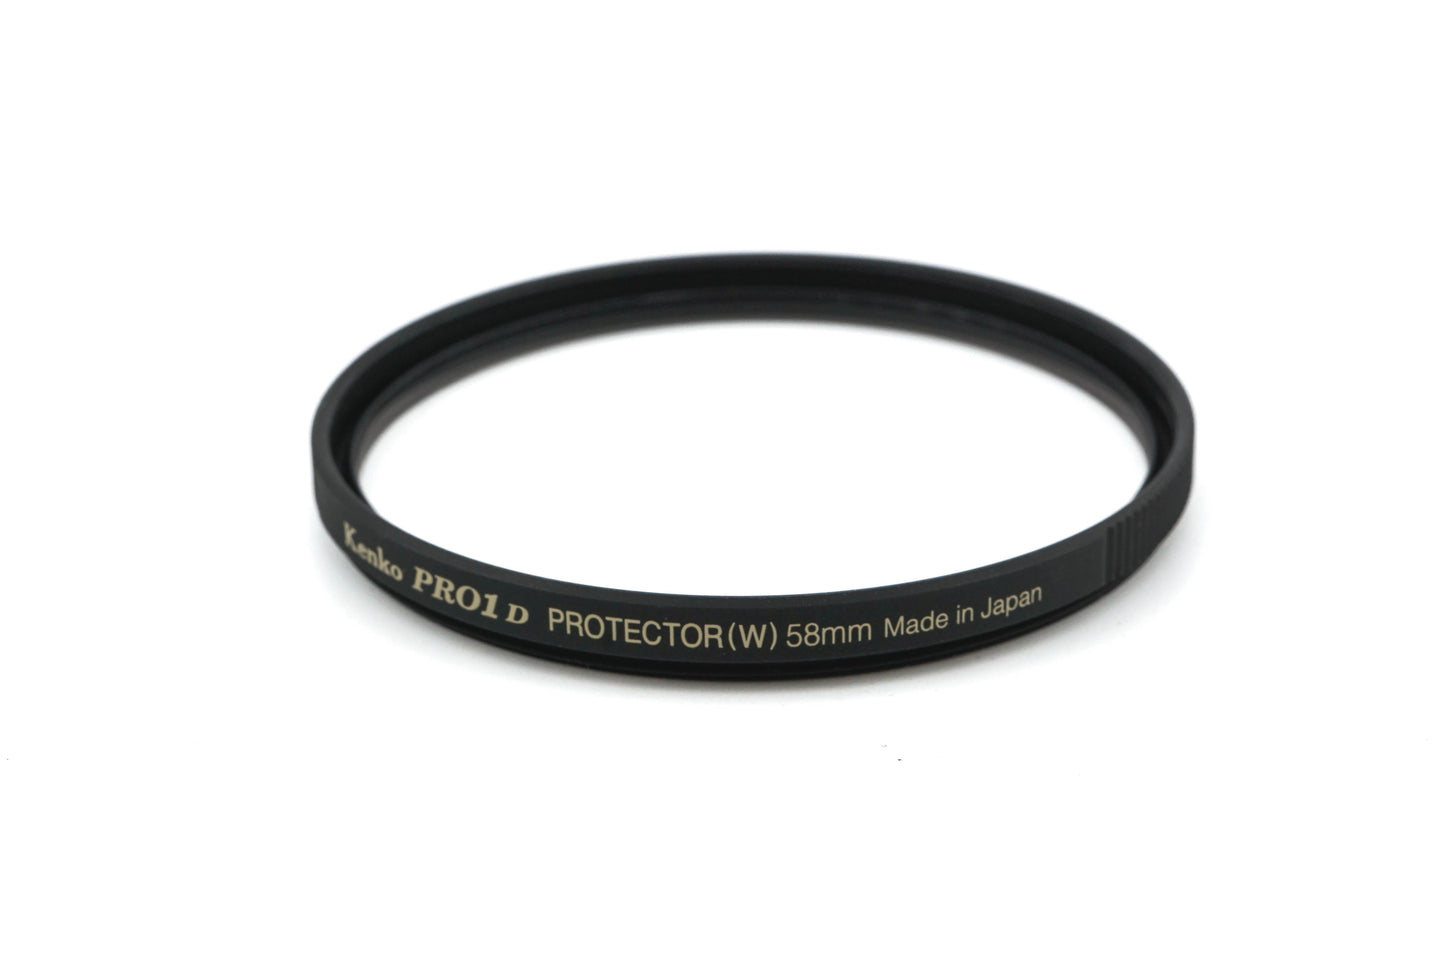 Kenko 58mm Protector Filter (W) Pro1D